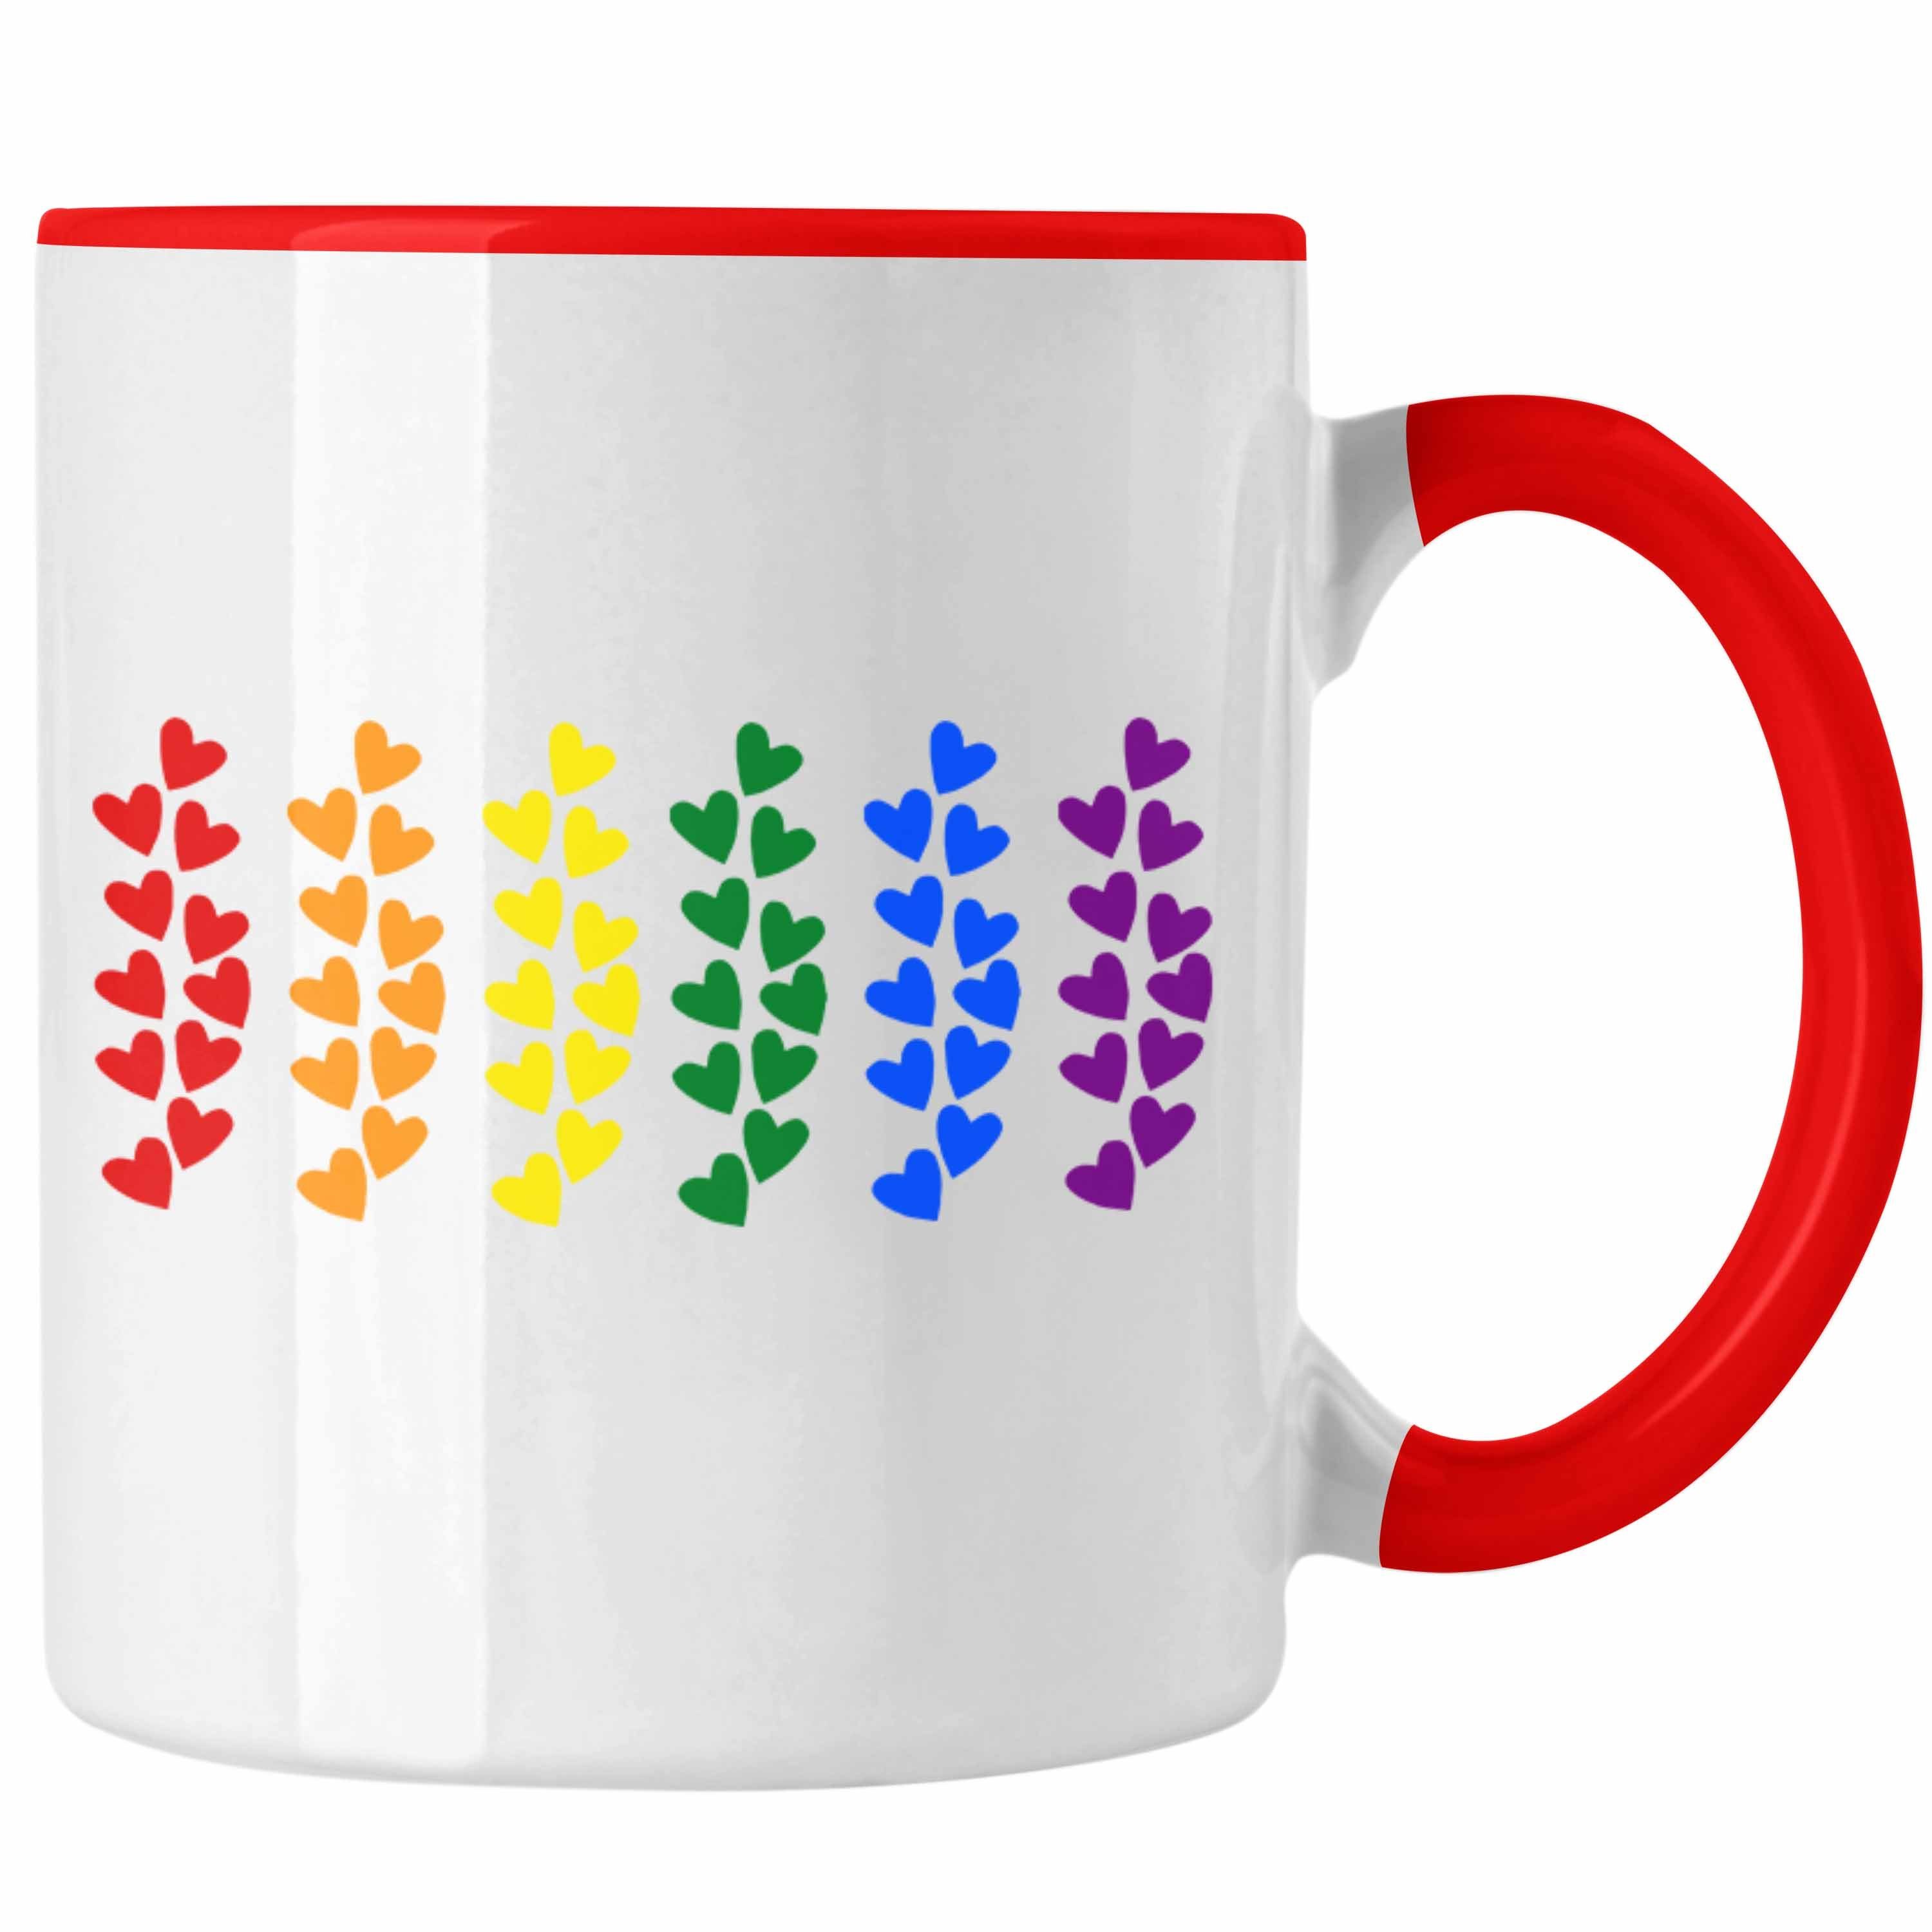 Trendation Tasse Trendation - Regenbogen Tasse Geschenk LGBT Schwule Lesben Transgender Grafik Pride Herzen Flagge Rot